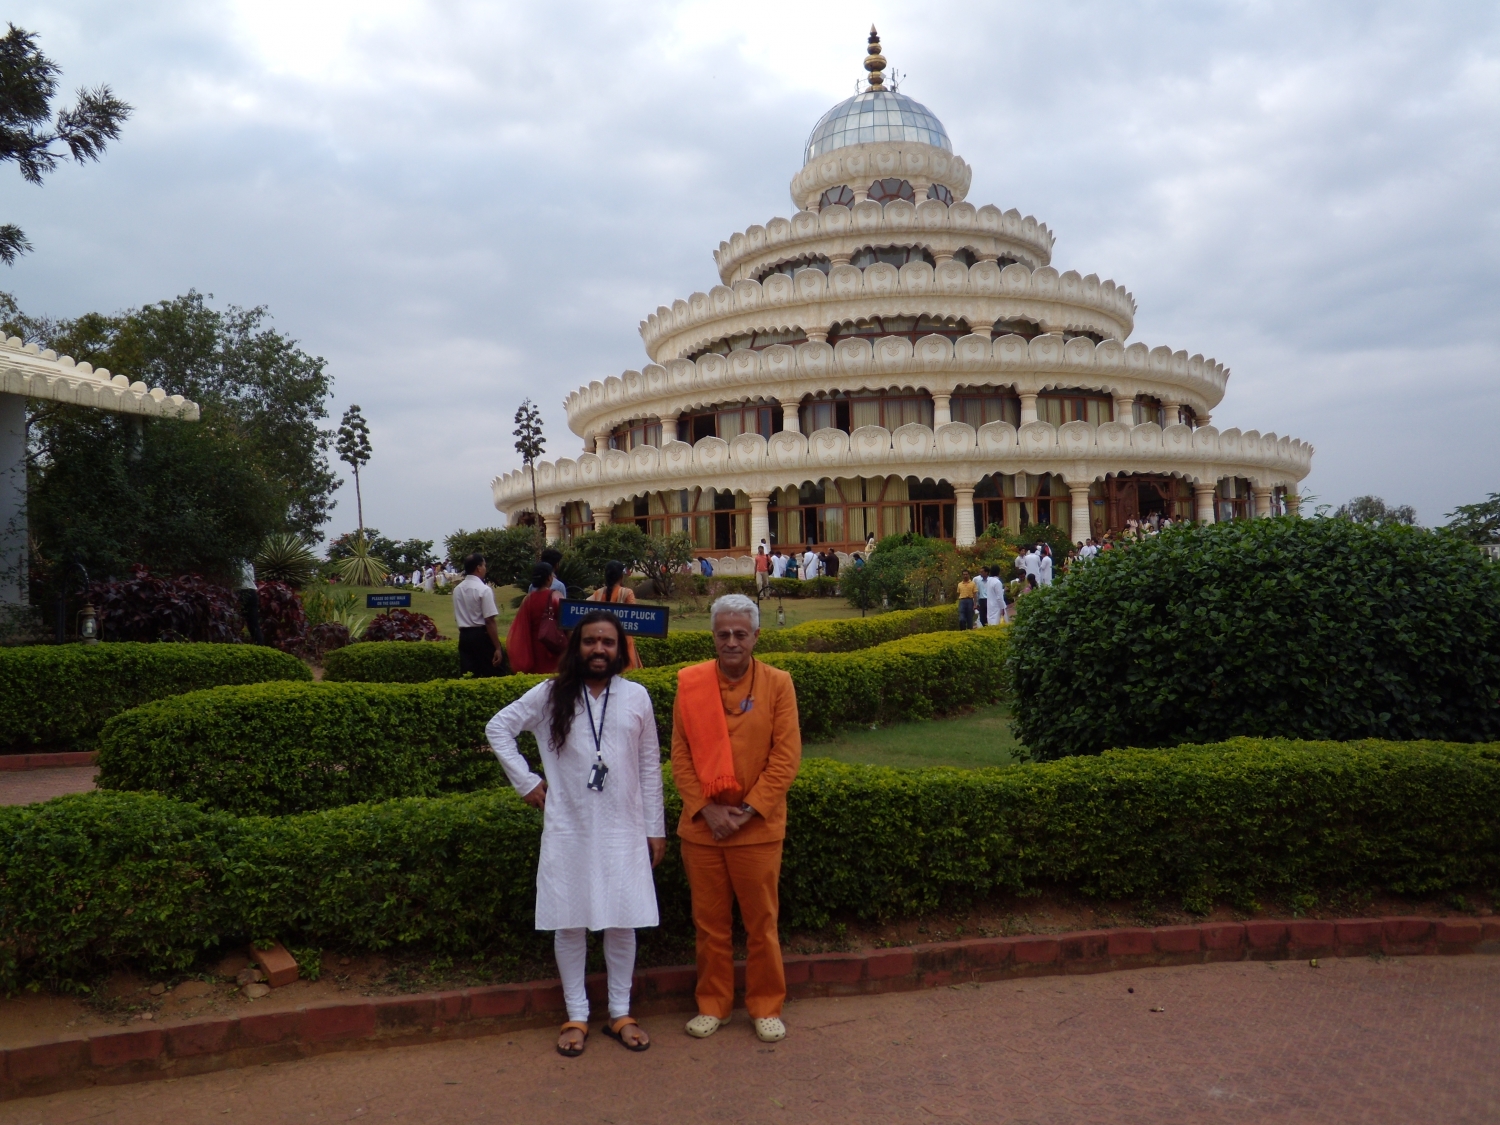 Encontro de H.H. Jagat Guru Amrta Súryánanda Mahá Rája com Shrí Shrí Ravi Shankar - Sede da Art of Living Foundation, Bengaluru, Índia - 2010, Janeiro